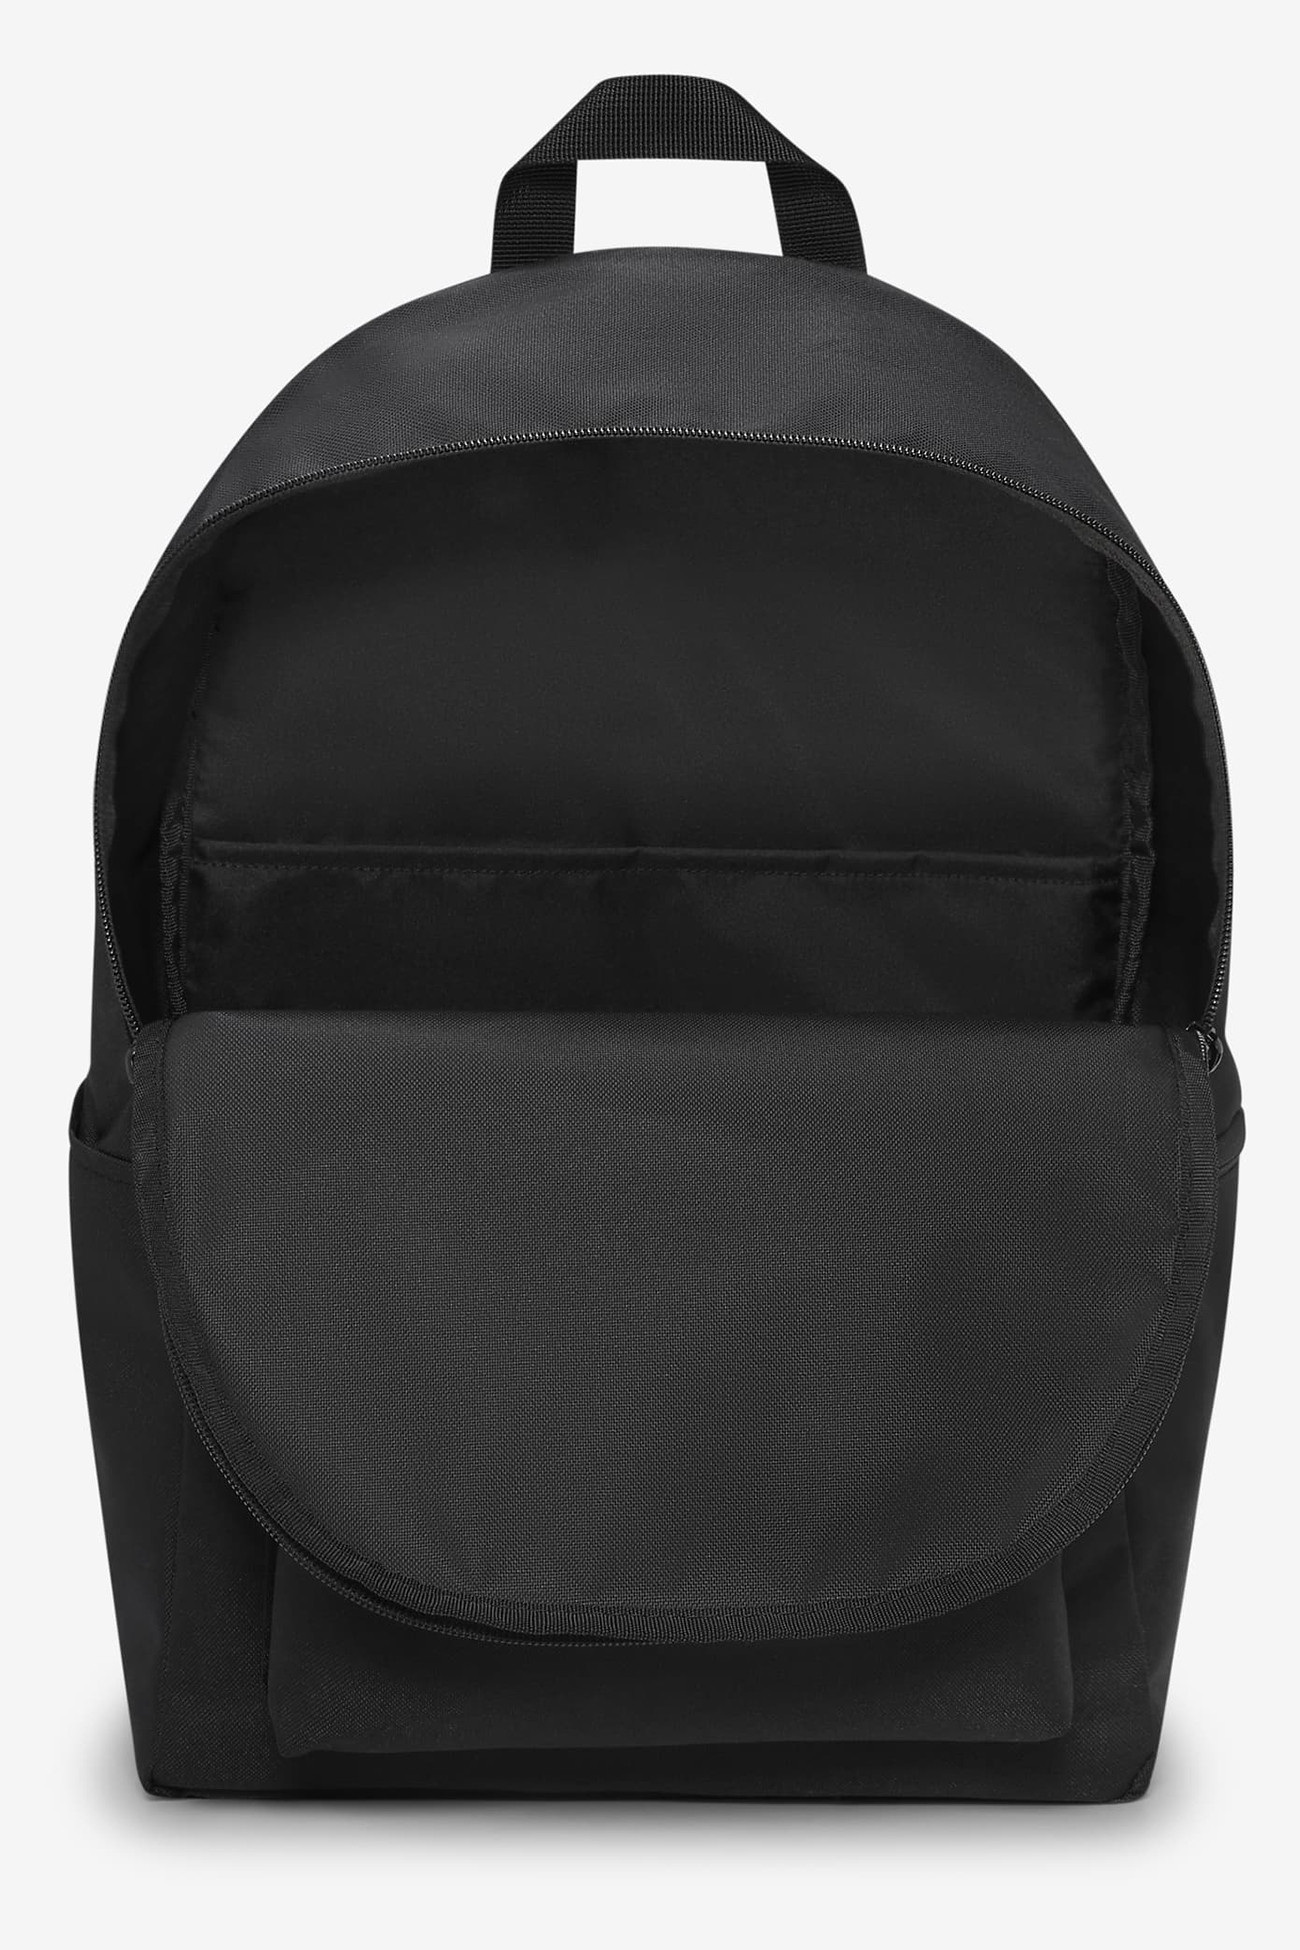 Рюкзак Nike Nk Heritage Backpack Hbr Grx черный DQ3432-010 изображение 5